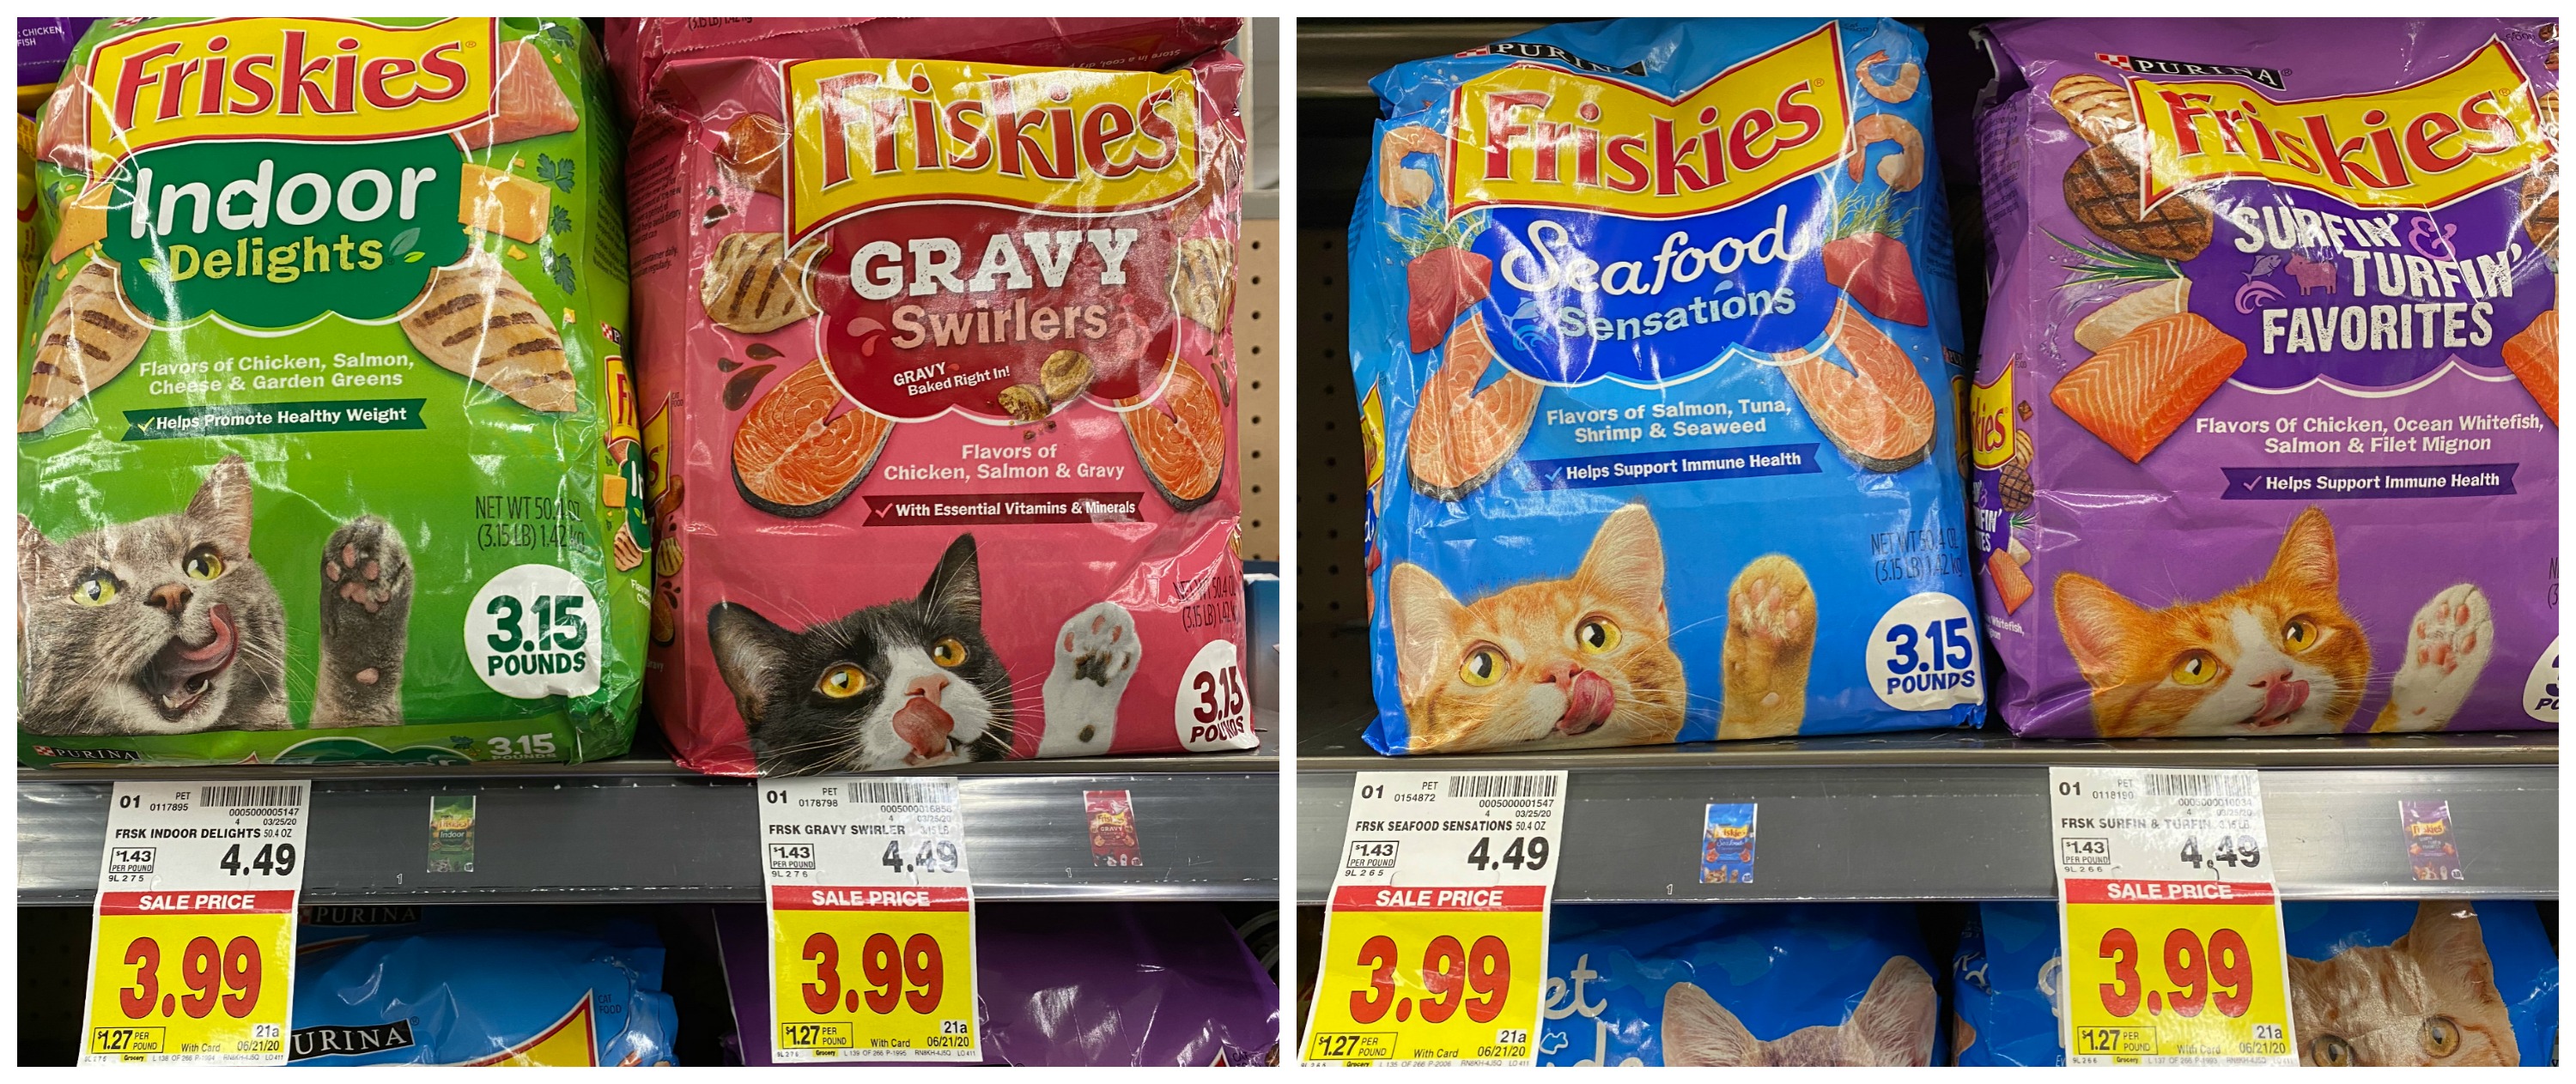 Purina Friskies Cat Food (Bags) are JUST 2.99 at Kroger!! Kroger Krazy